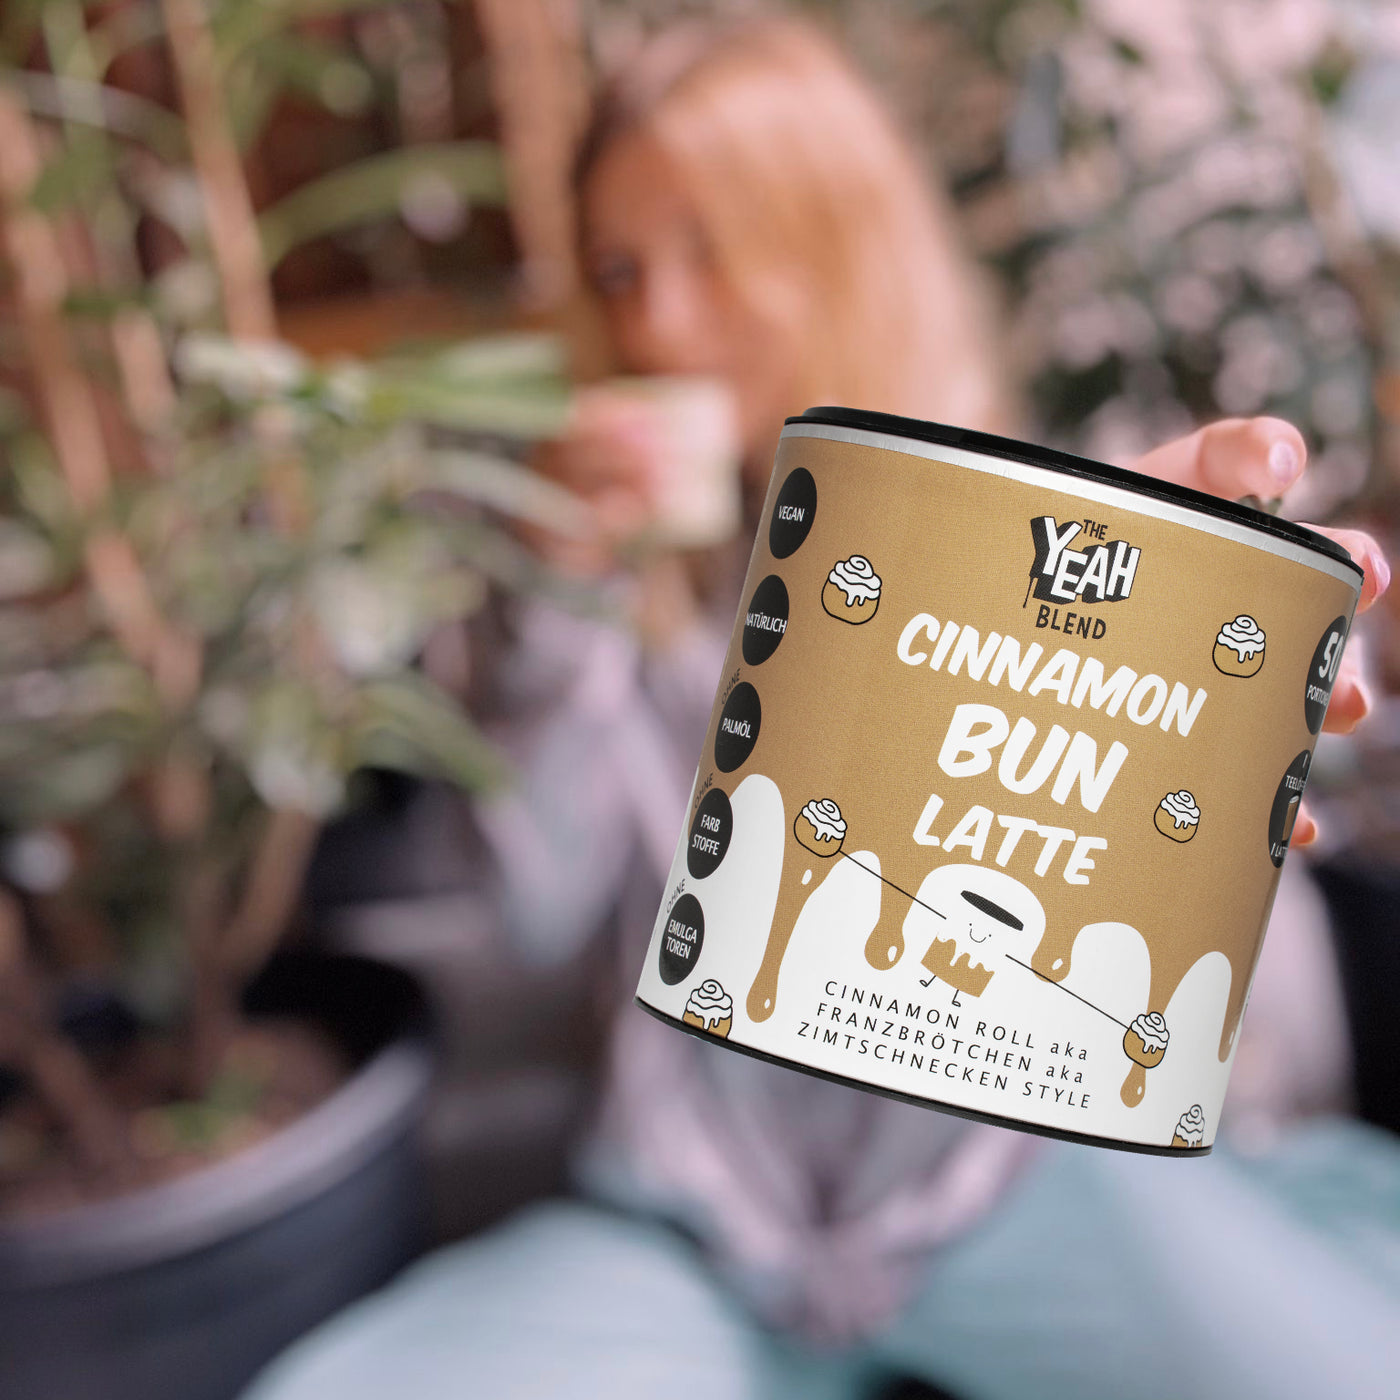 Cinnamon Bun Latte - Franzbrötchen Style (50 Drinks/250g)